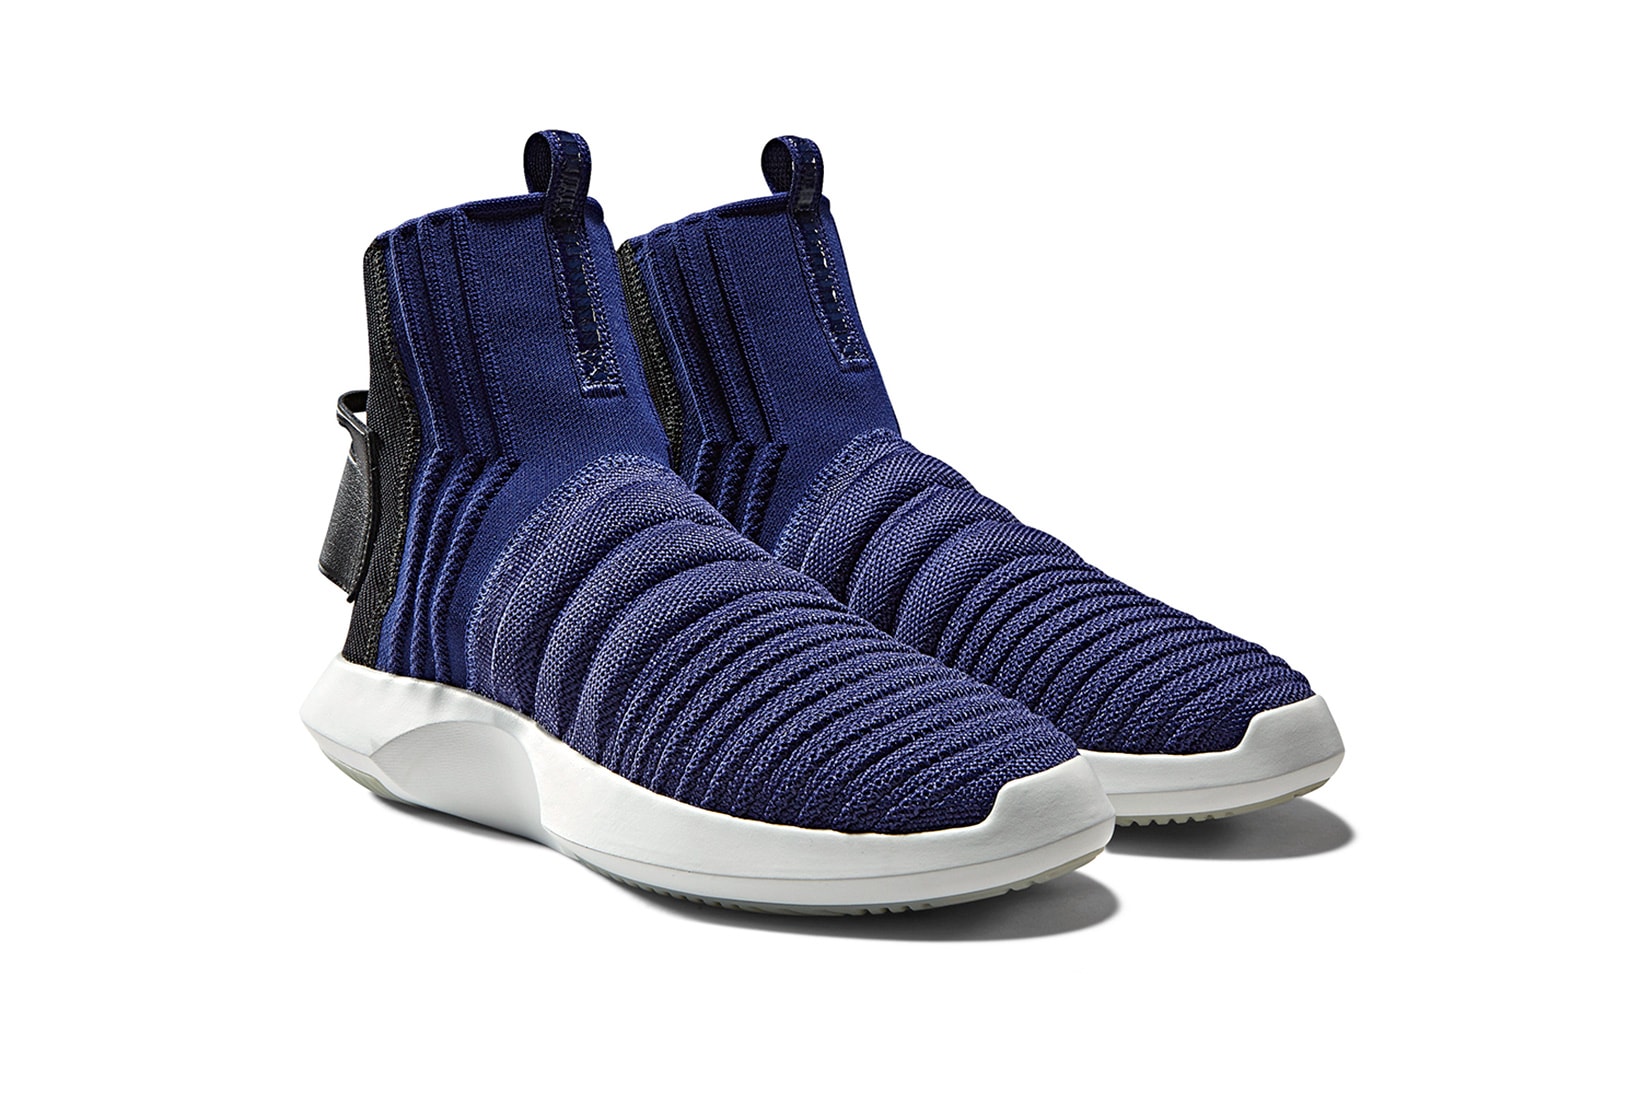 adidas Crazy ADV Sock Primeknit Real Purple may 2018 footwear release date drops info